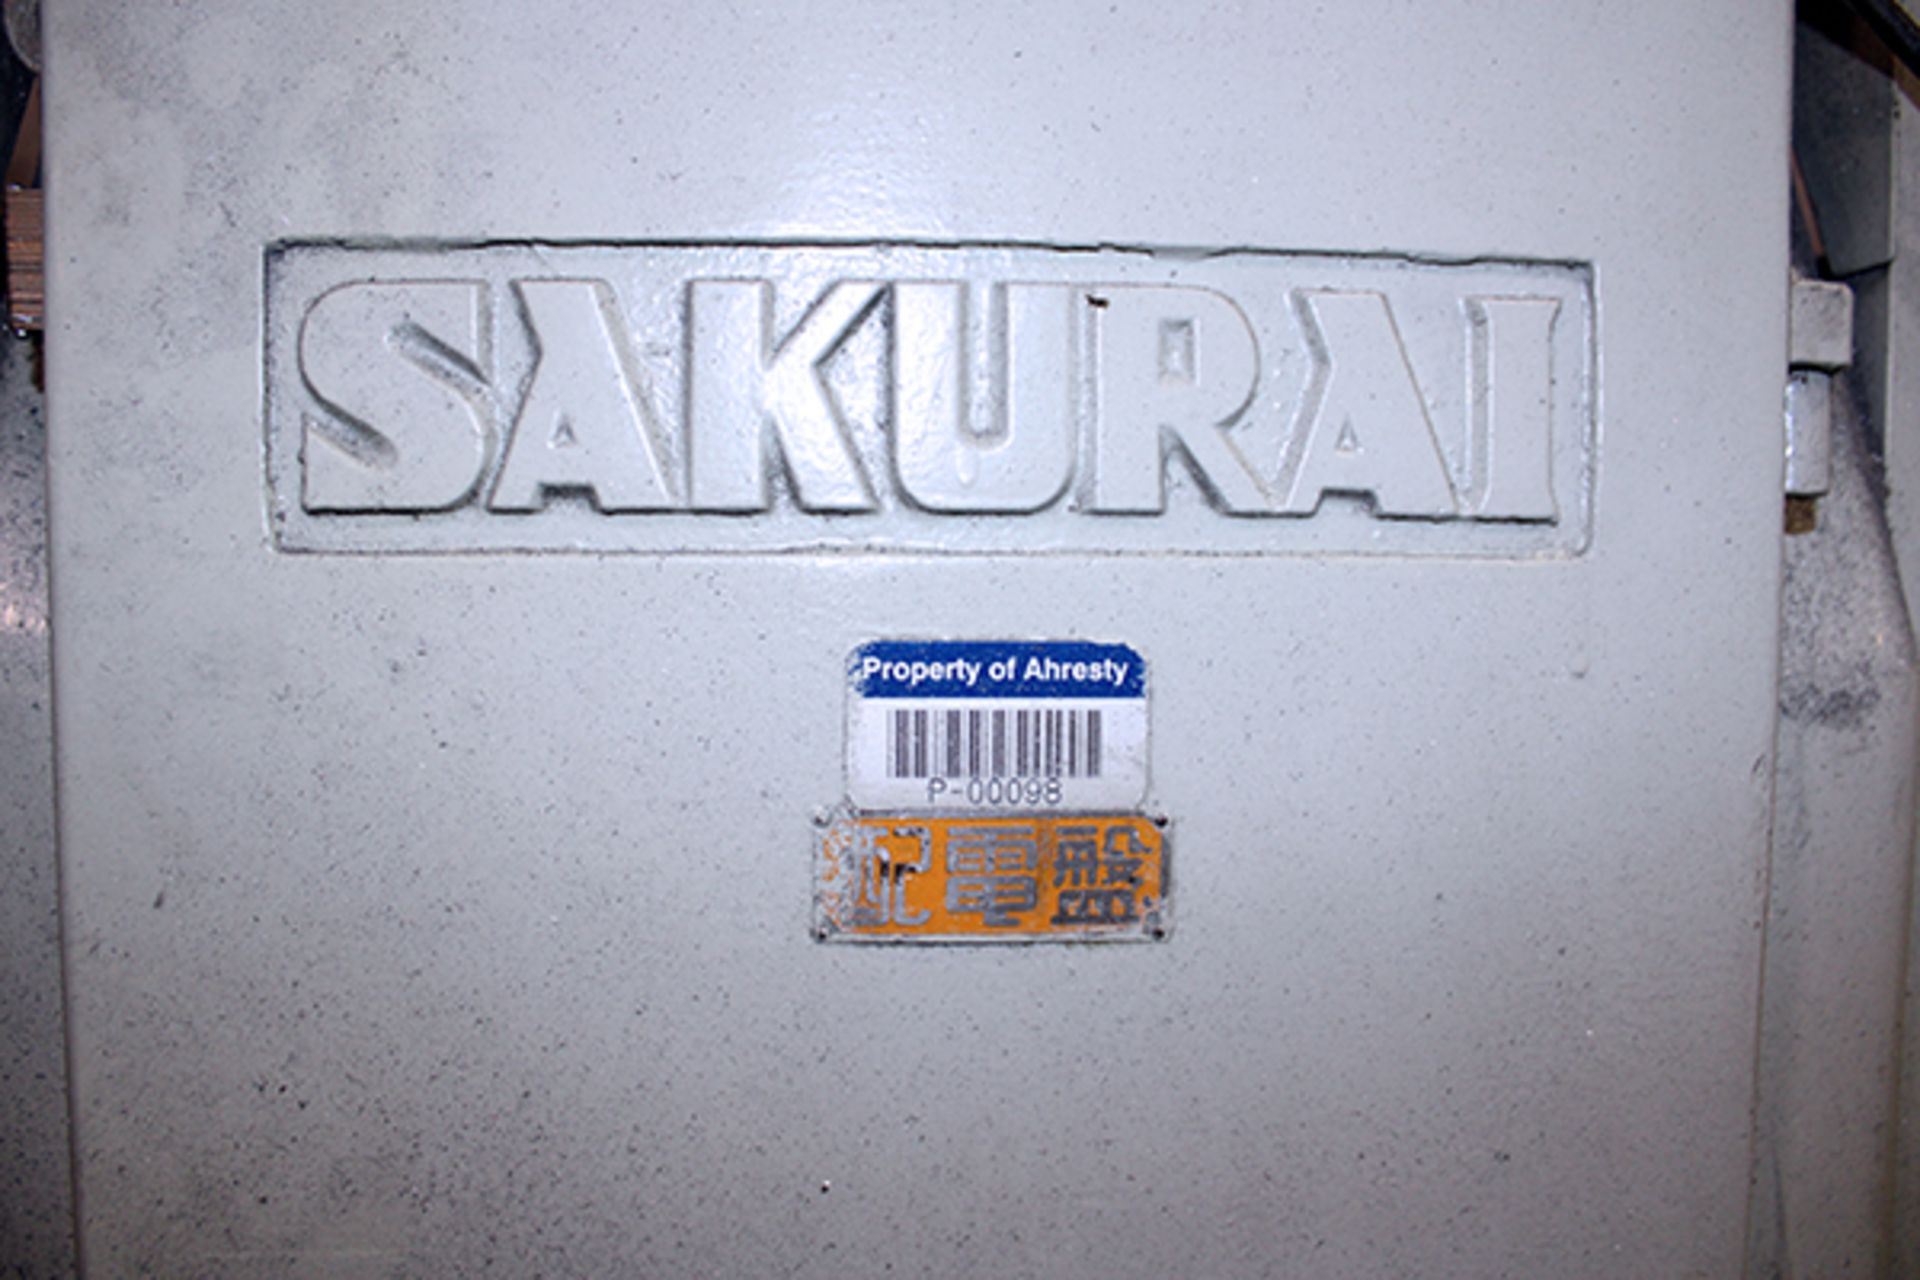 Sakurai RMW2A 1200 Rotary Milling Machine - Image 10 of 12